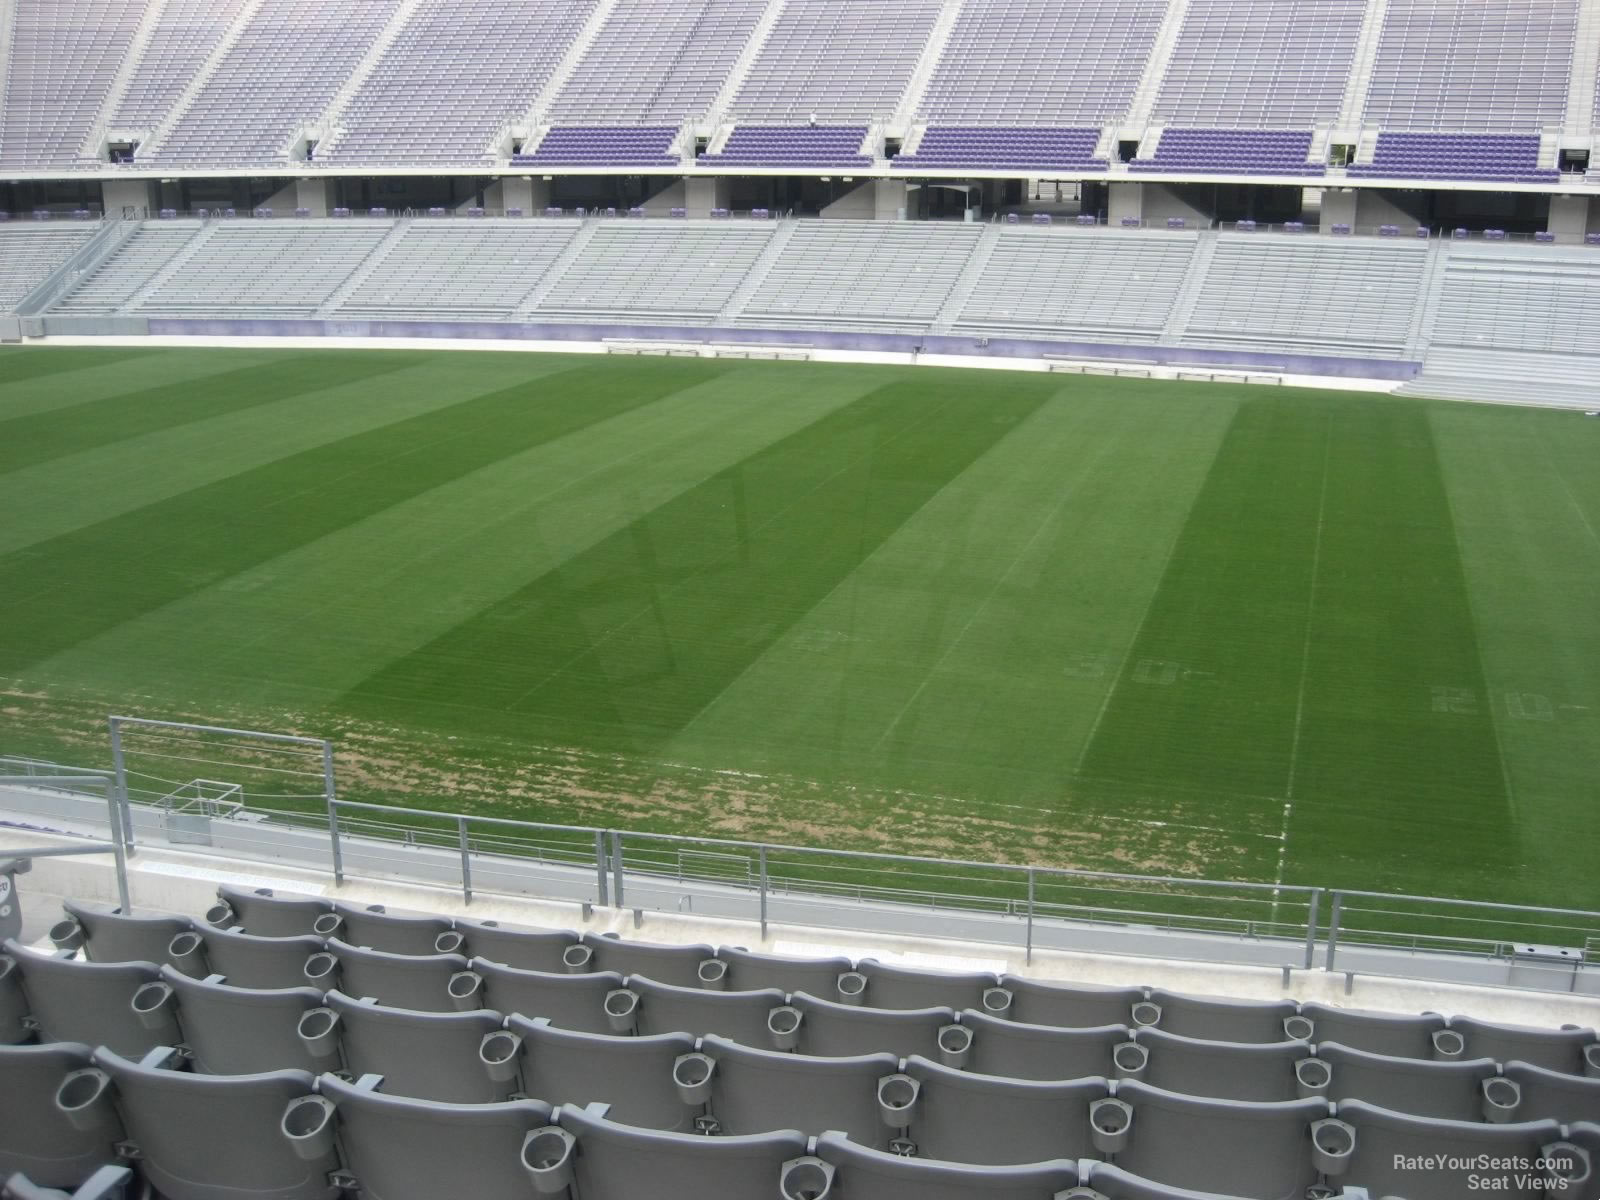 section 205, row h seat view  - amon carter stadium